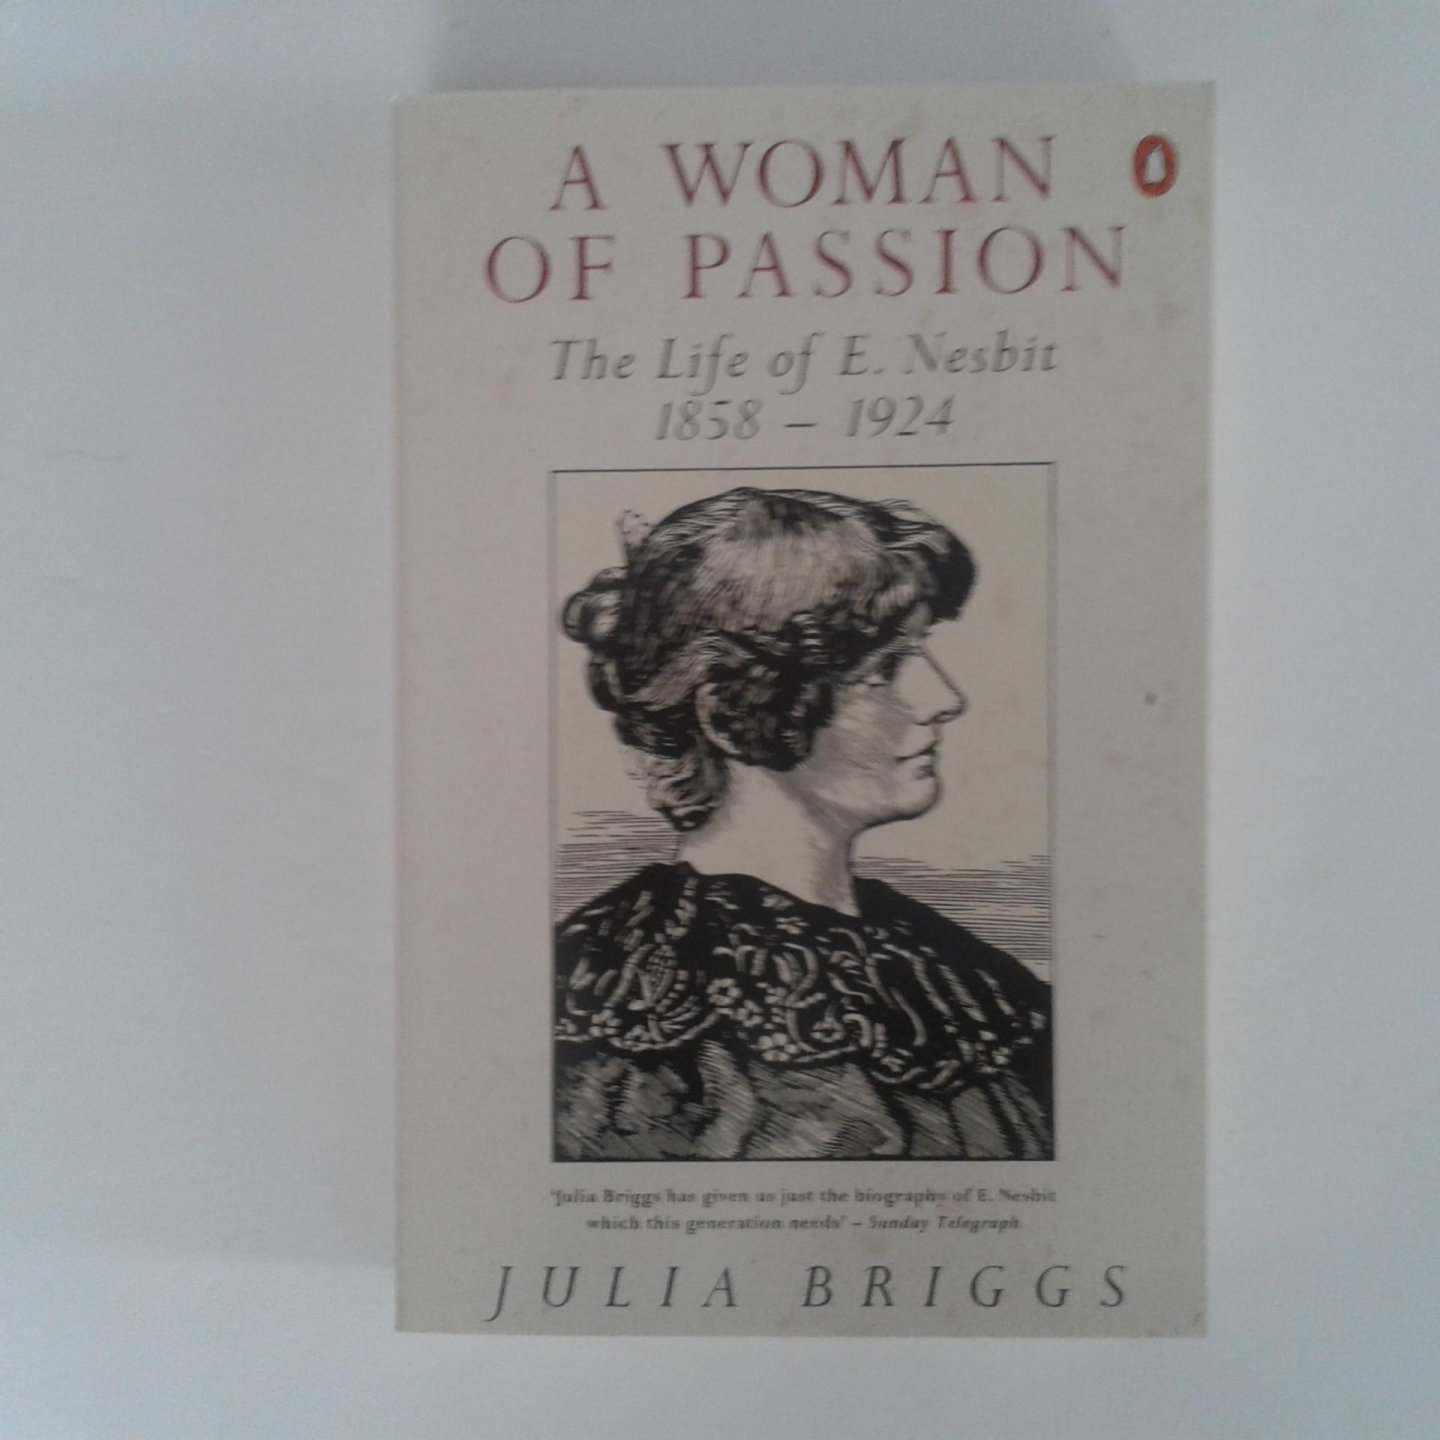 Briggs, Julia - A Woman of Passion ; The Life of E. Nesbit 1858-1924